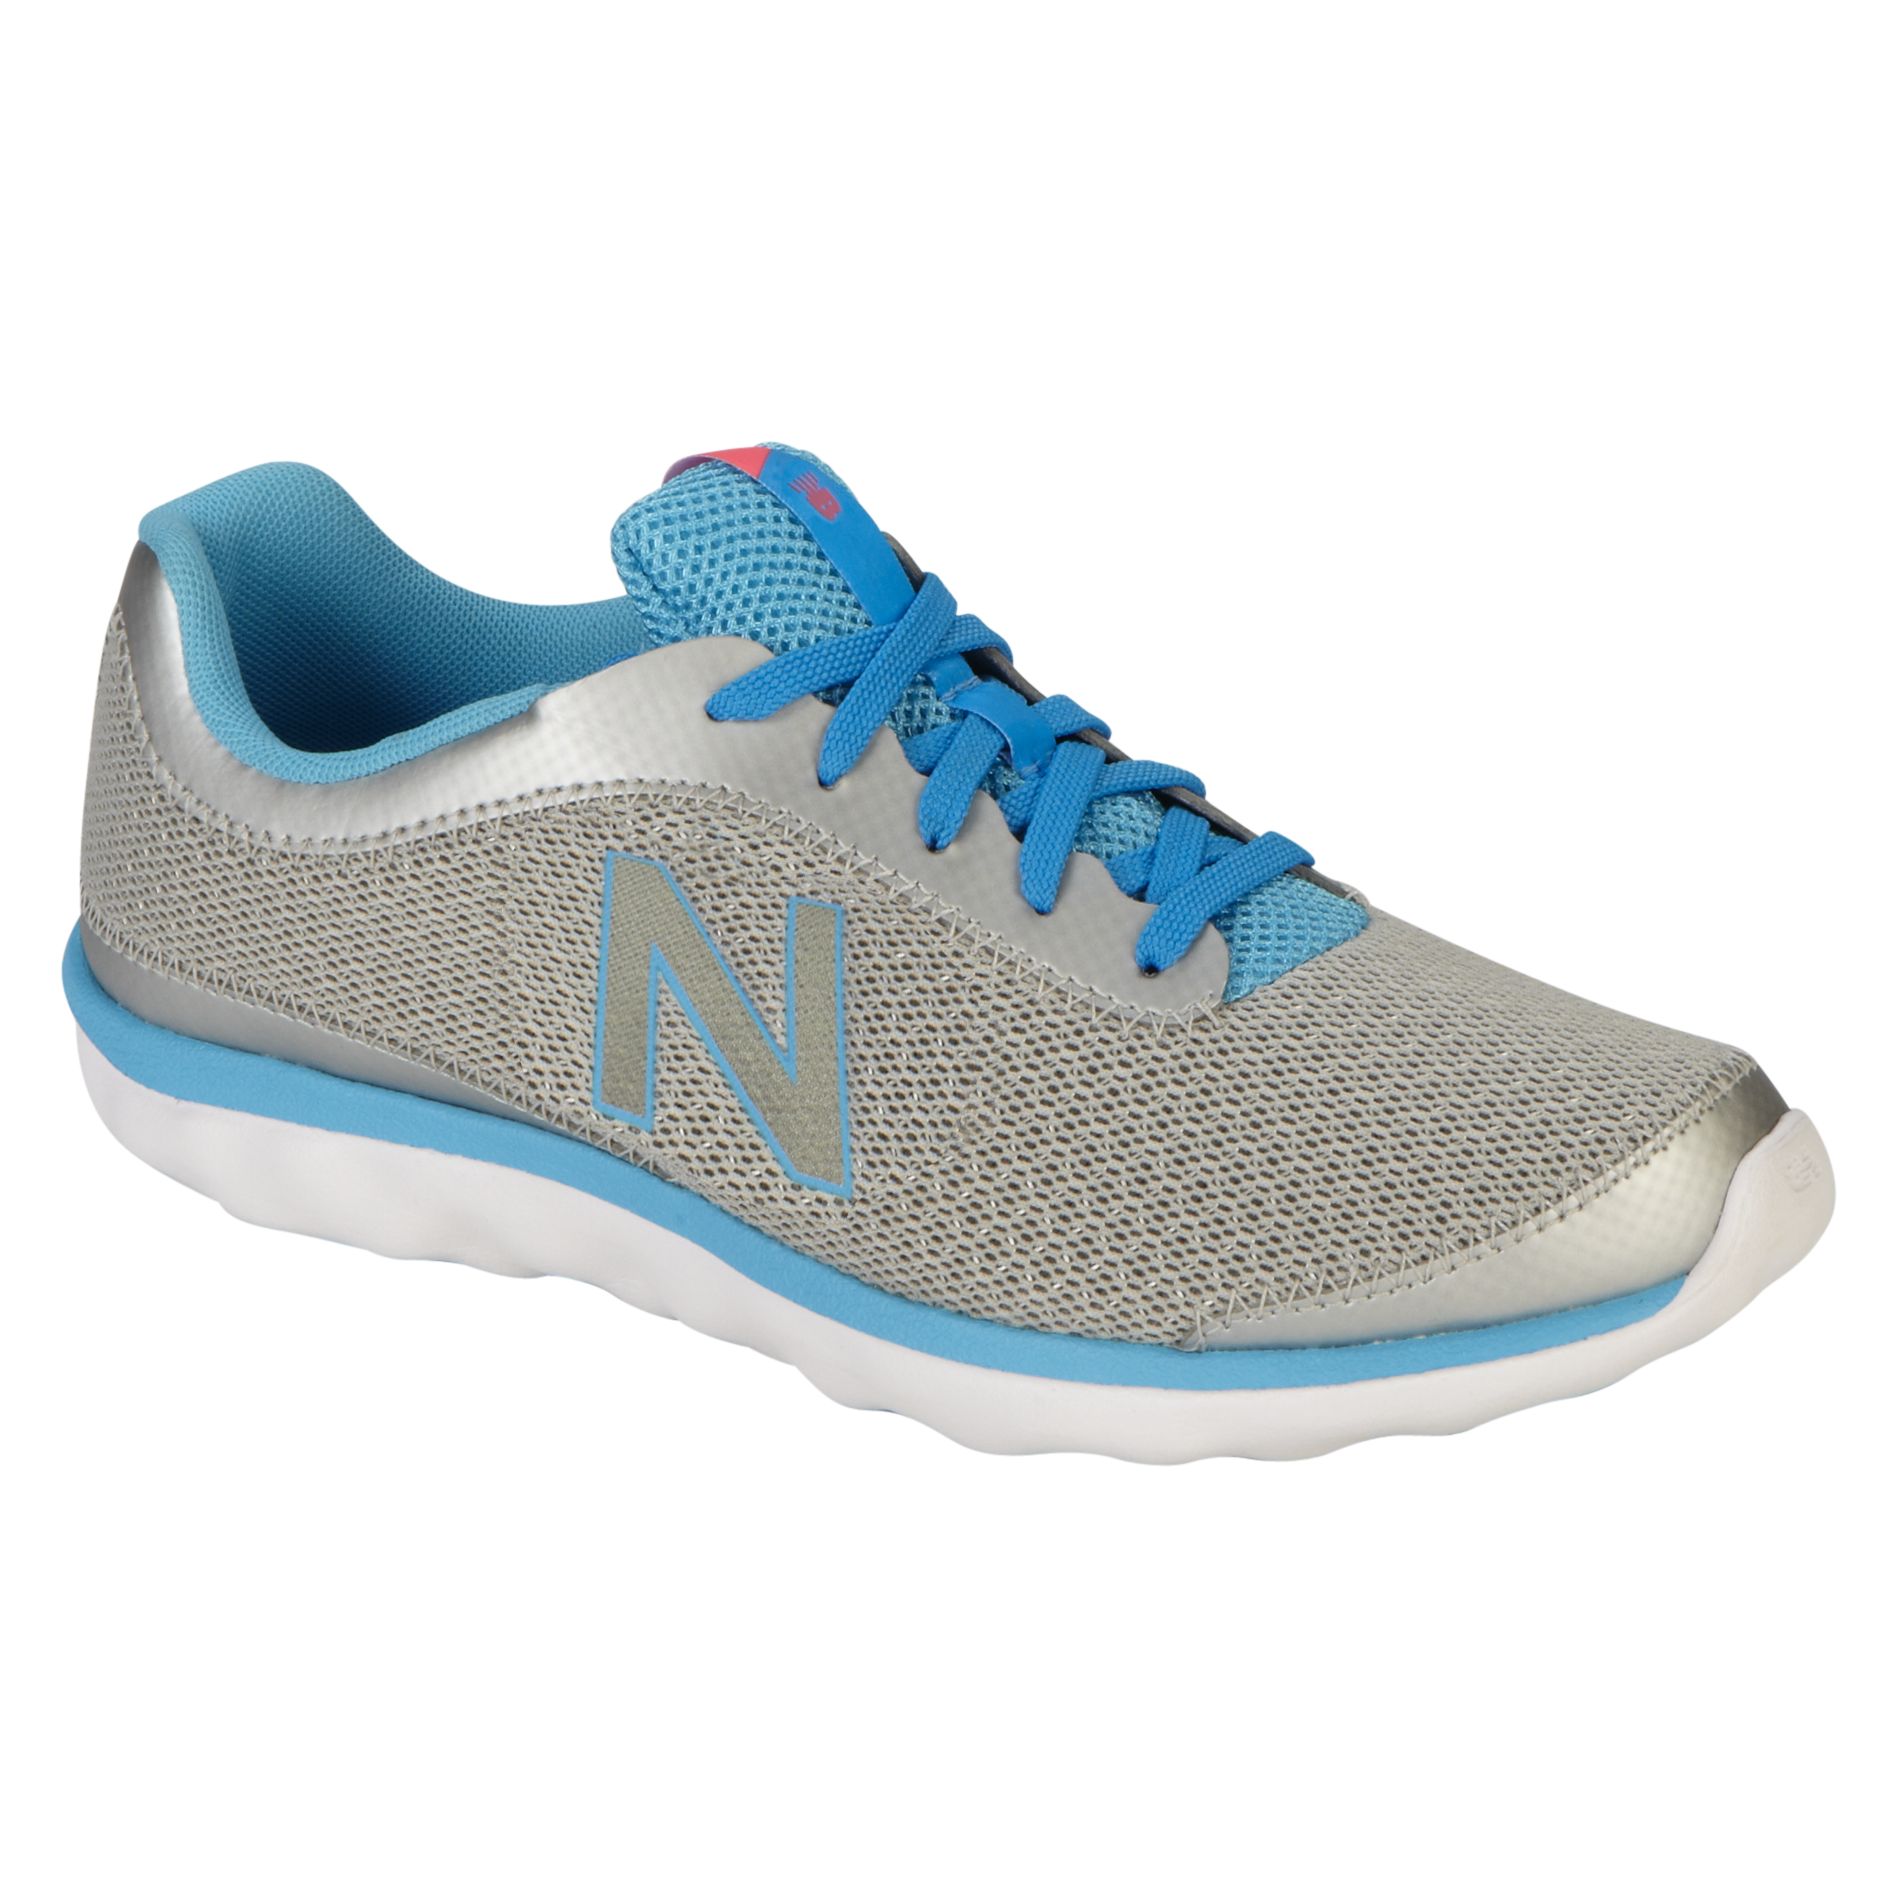 New Balance Women's 695 Walking Athletic Shoe - Grey/Blue